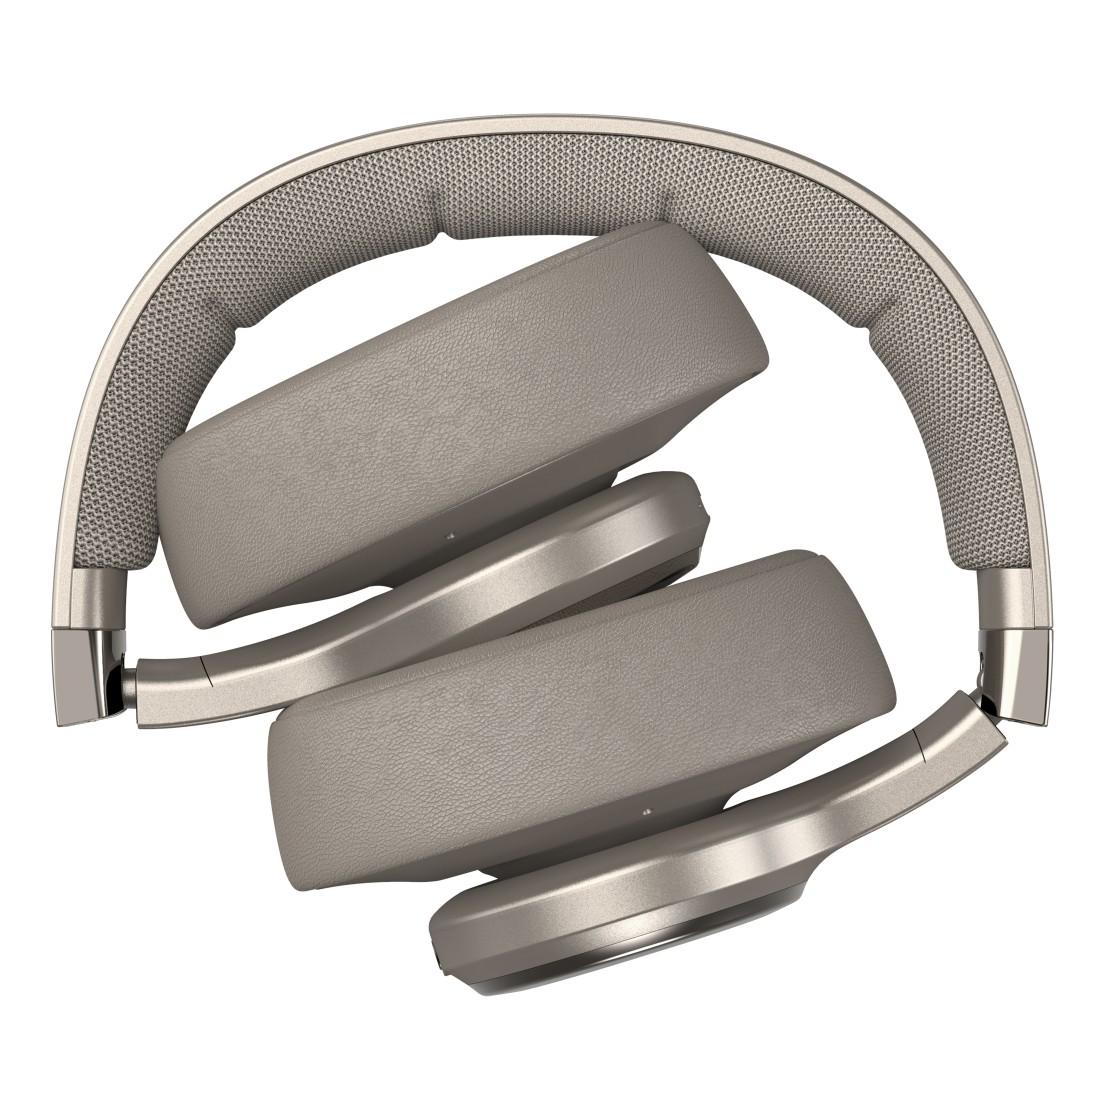 FRESH N REBEL Clam Elite, Bluetooth Kopfhörer Silky Over-ear Sand